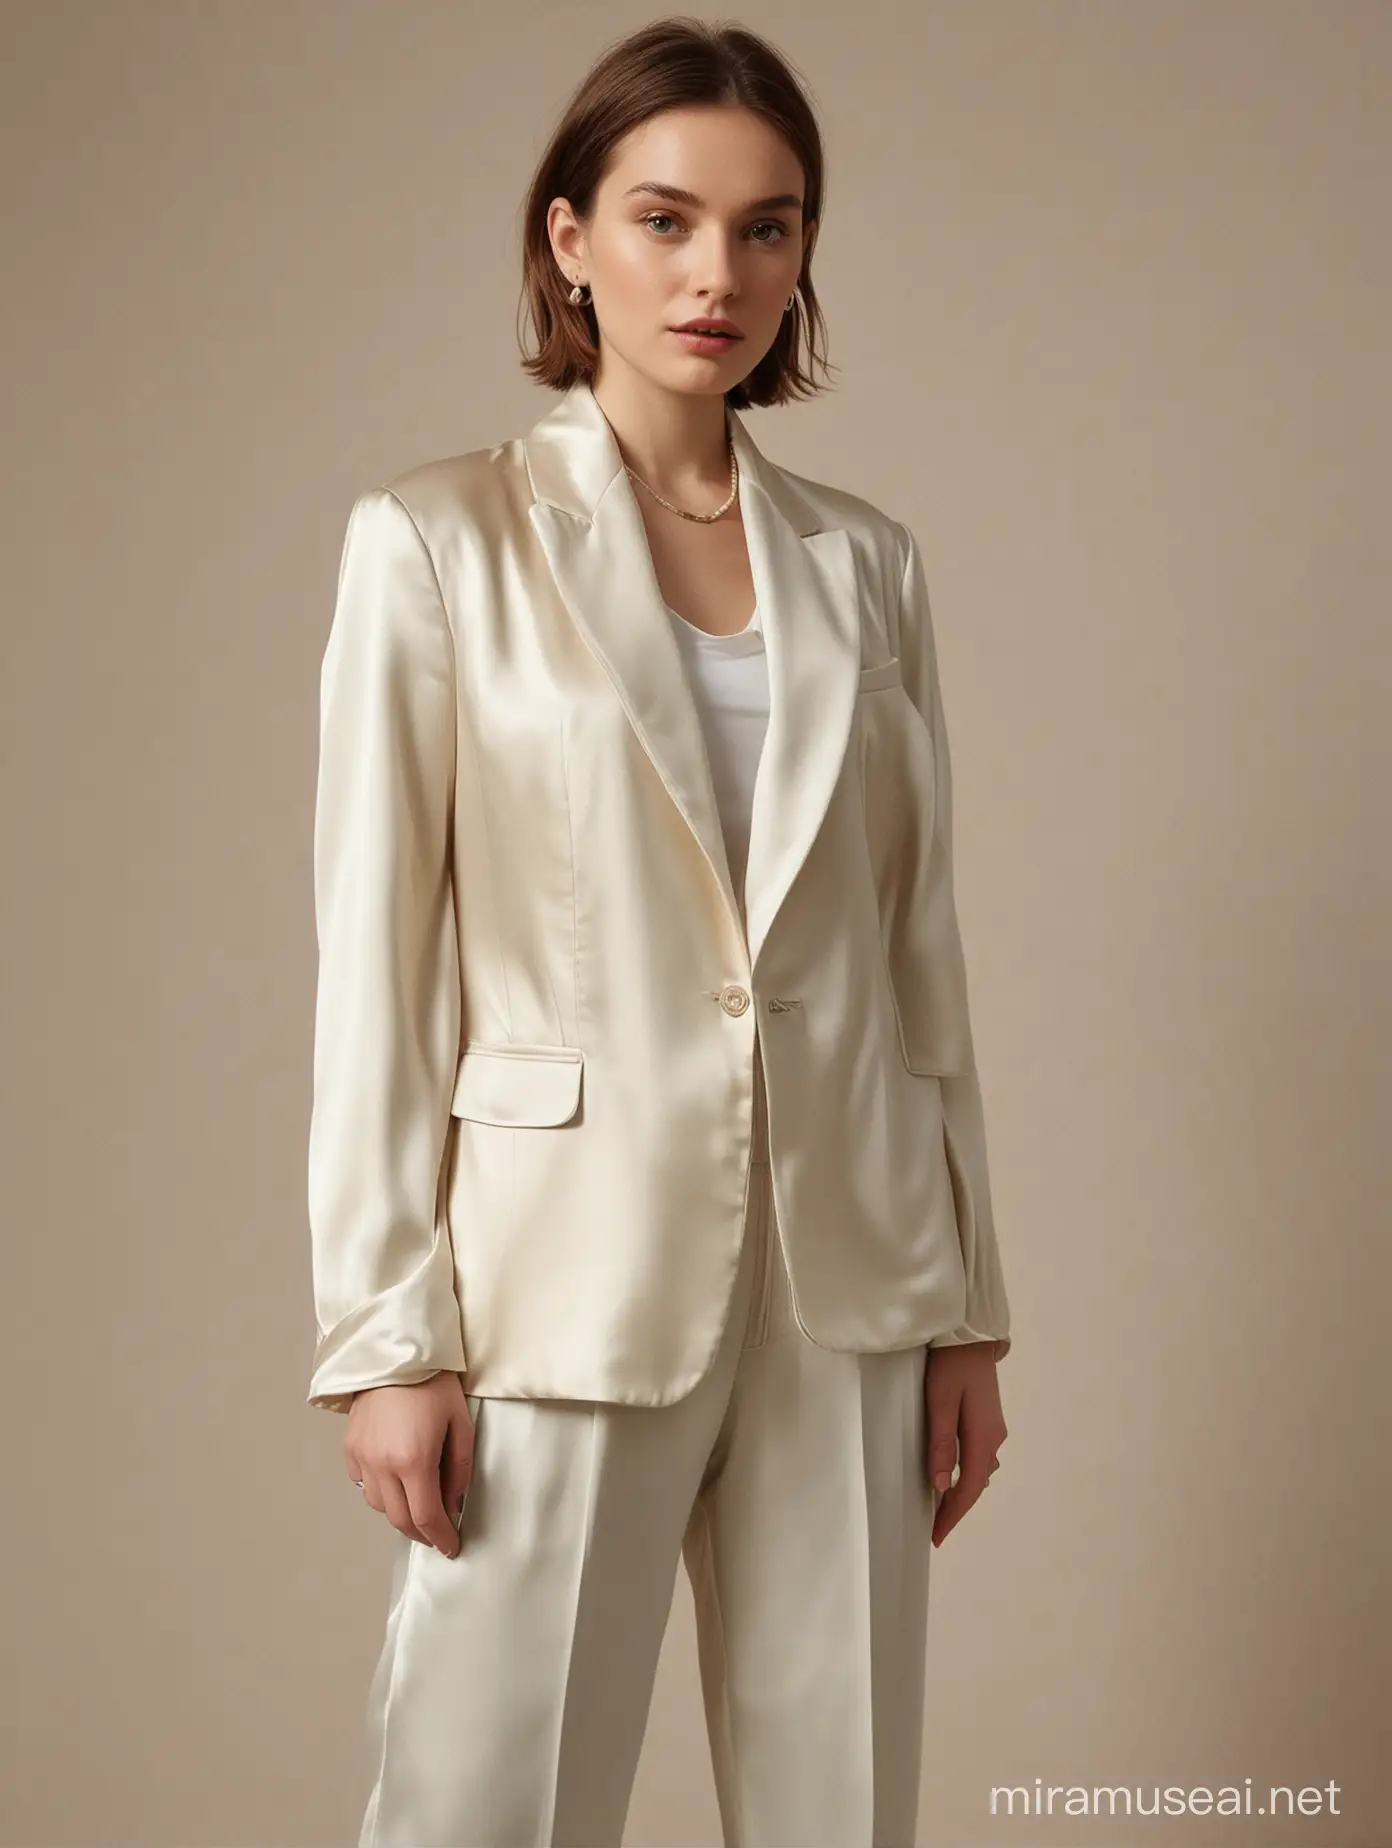 Elegant Woman in Silk Jacket Posing Gracefully